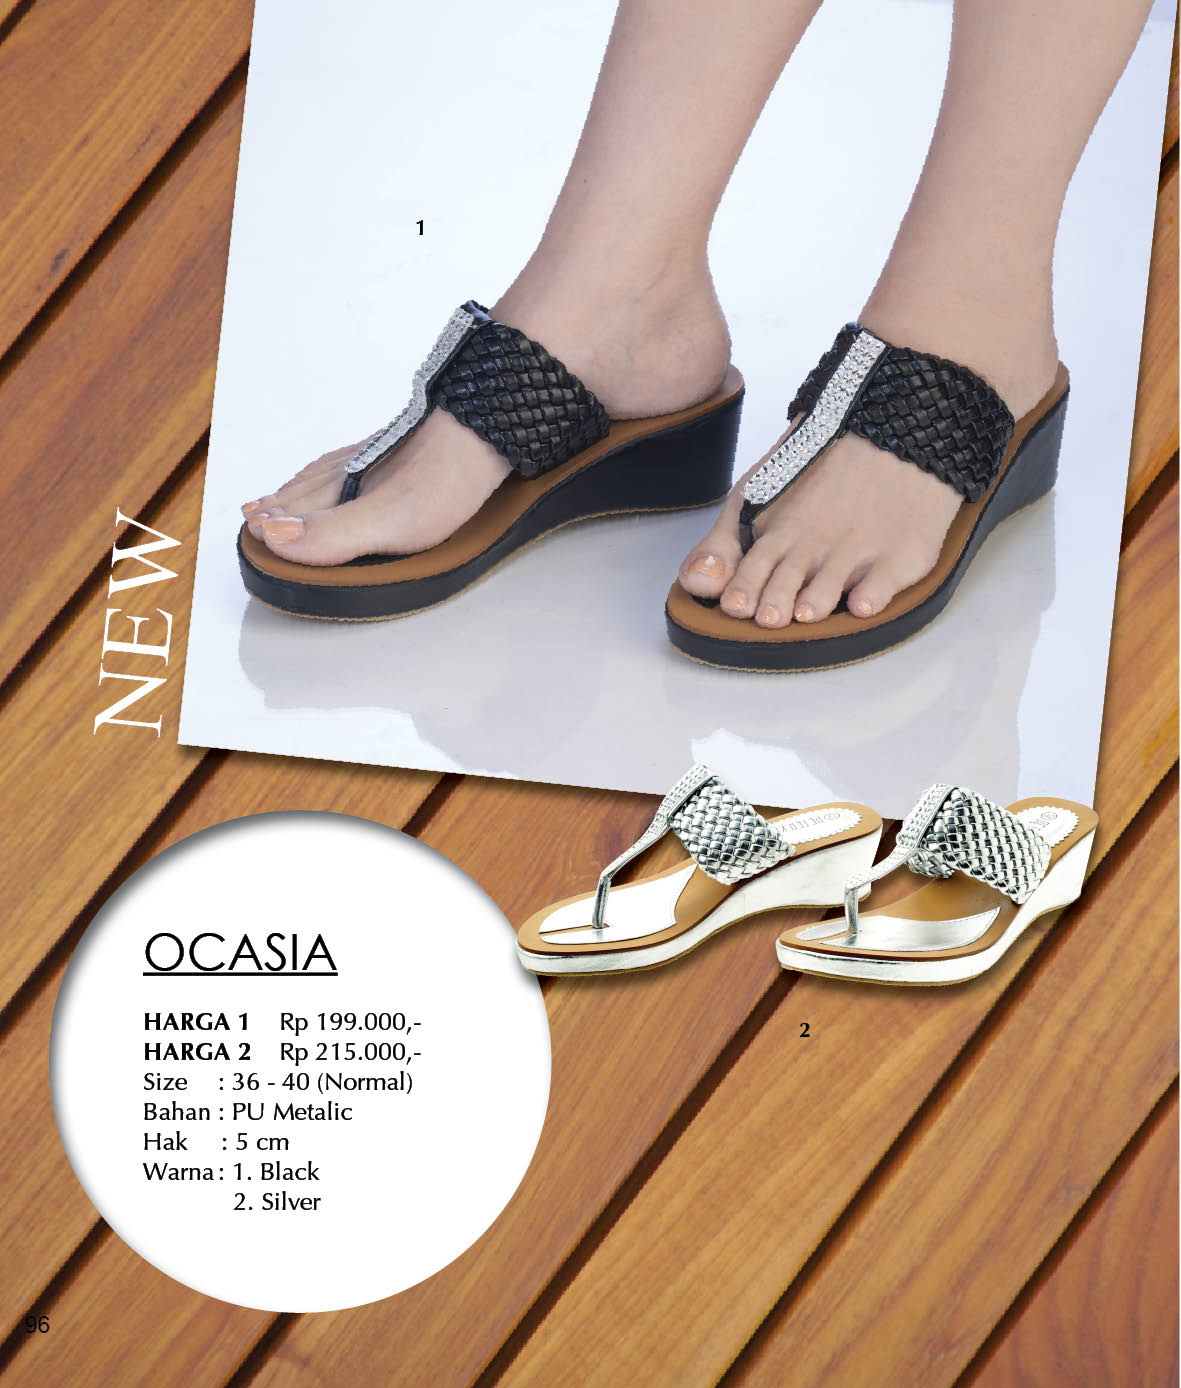  Katalog  sept 2011  Sepatu dan Sendal Wanita    Keiza Boutique